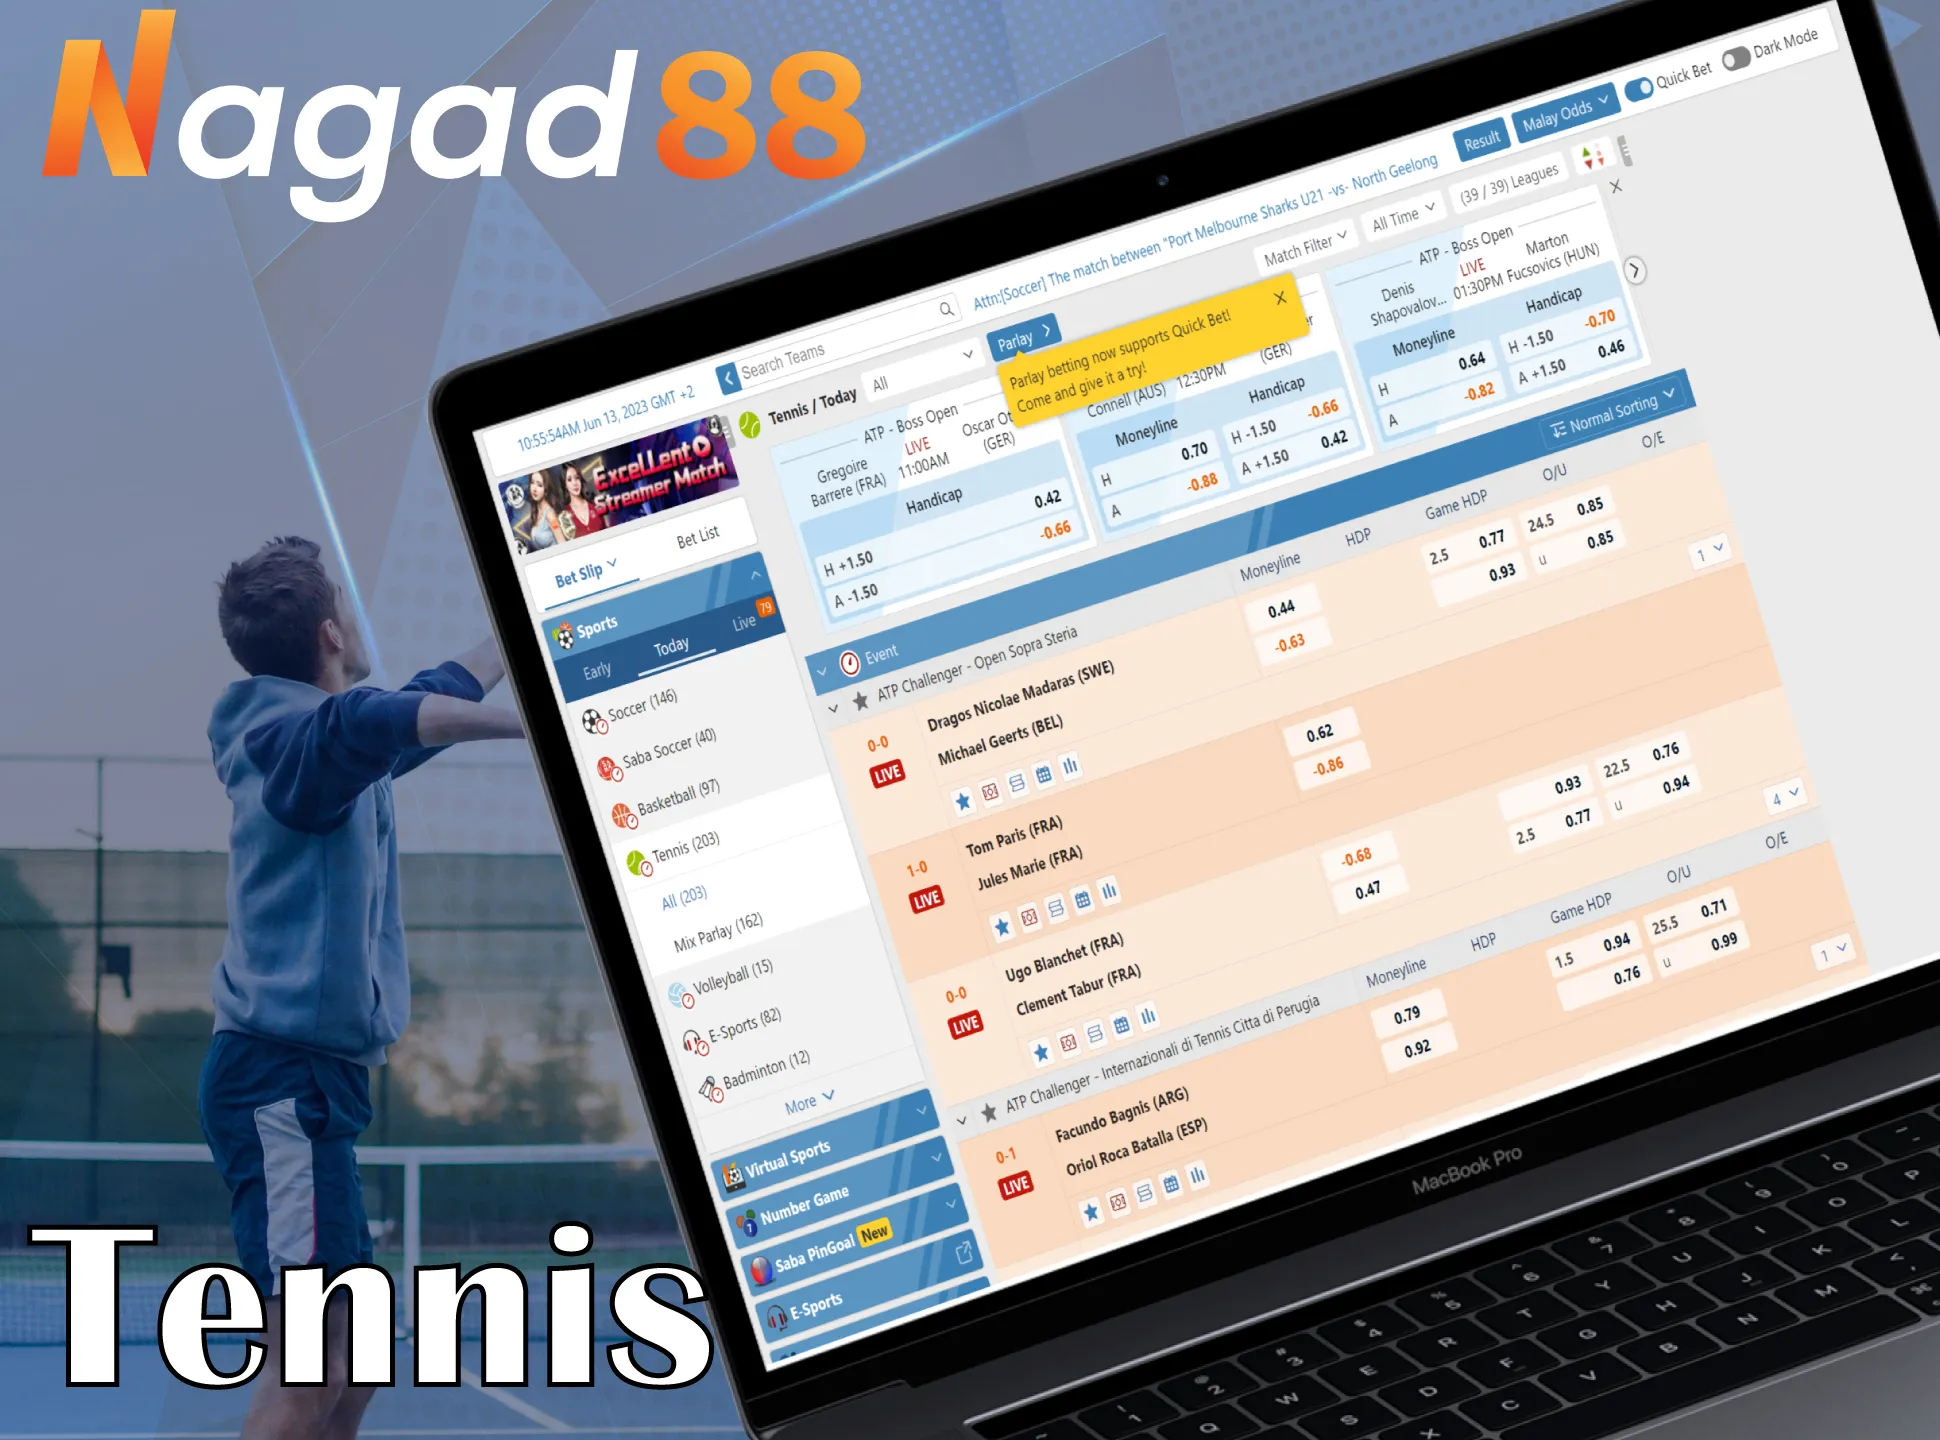 With Nagad88, make your winning tennis bet.